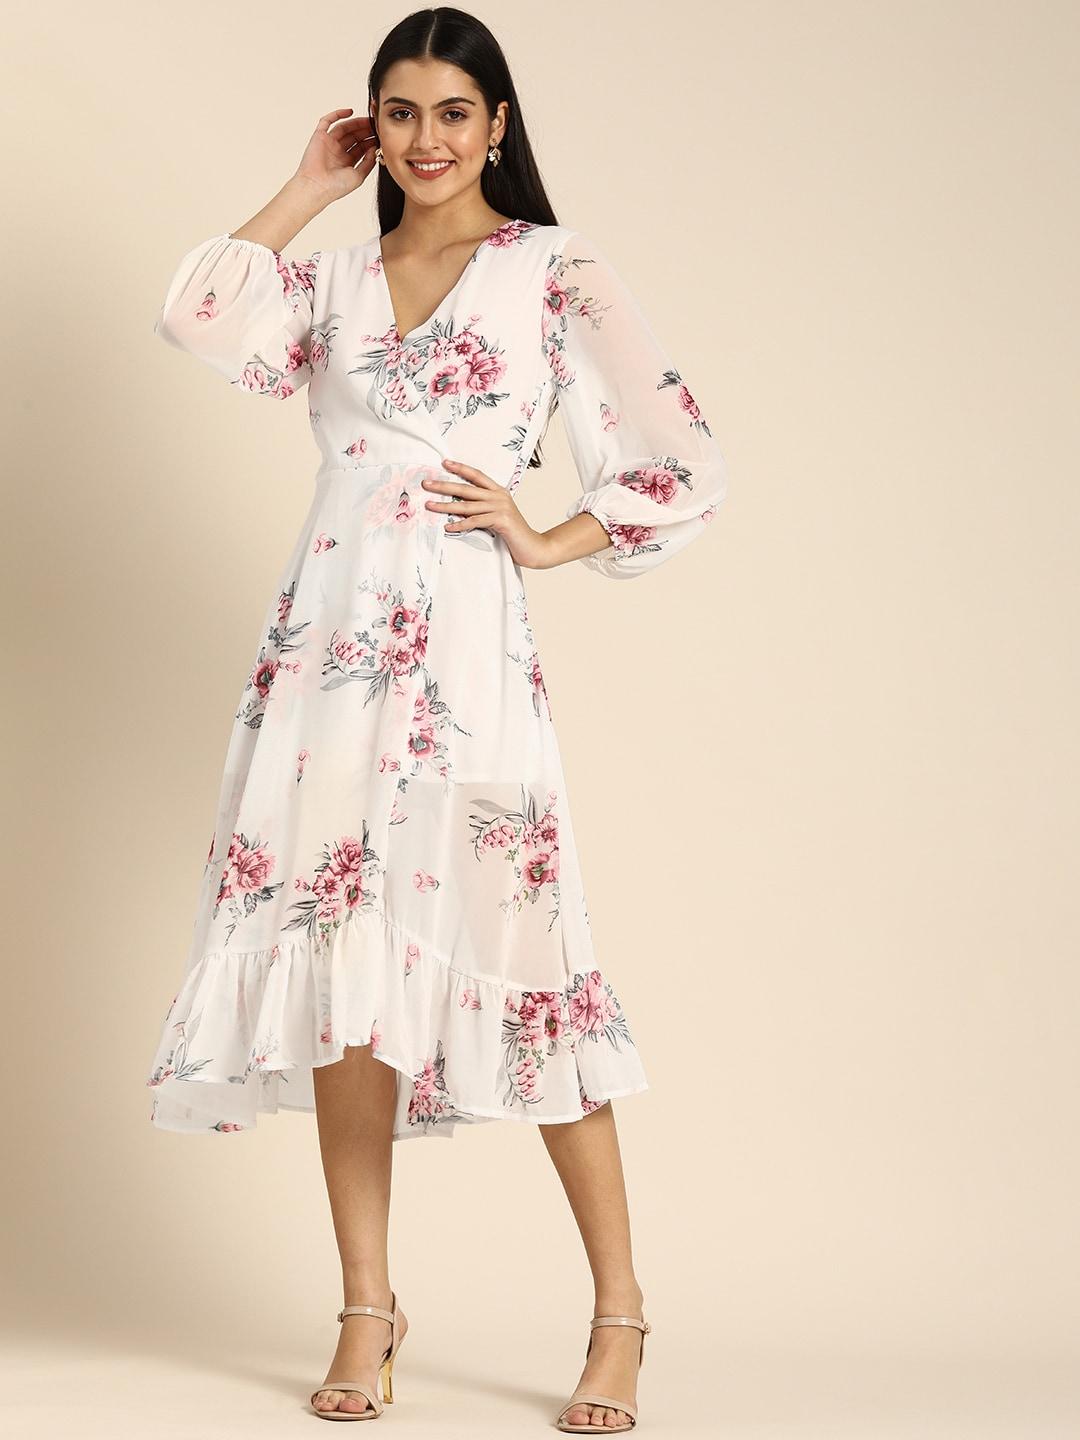 dodo-&-moa-white-&-pink-floral-print-georgette-midi-dress